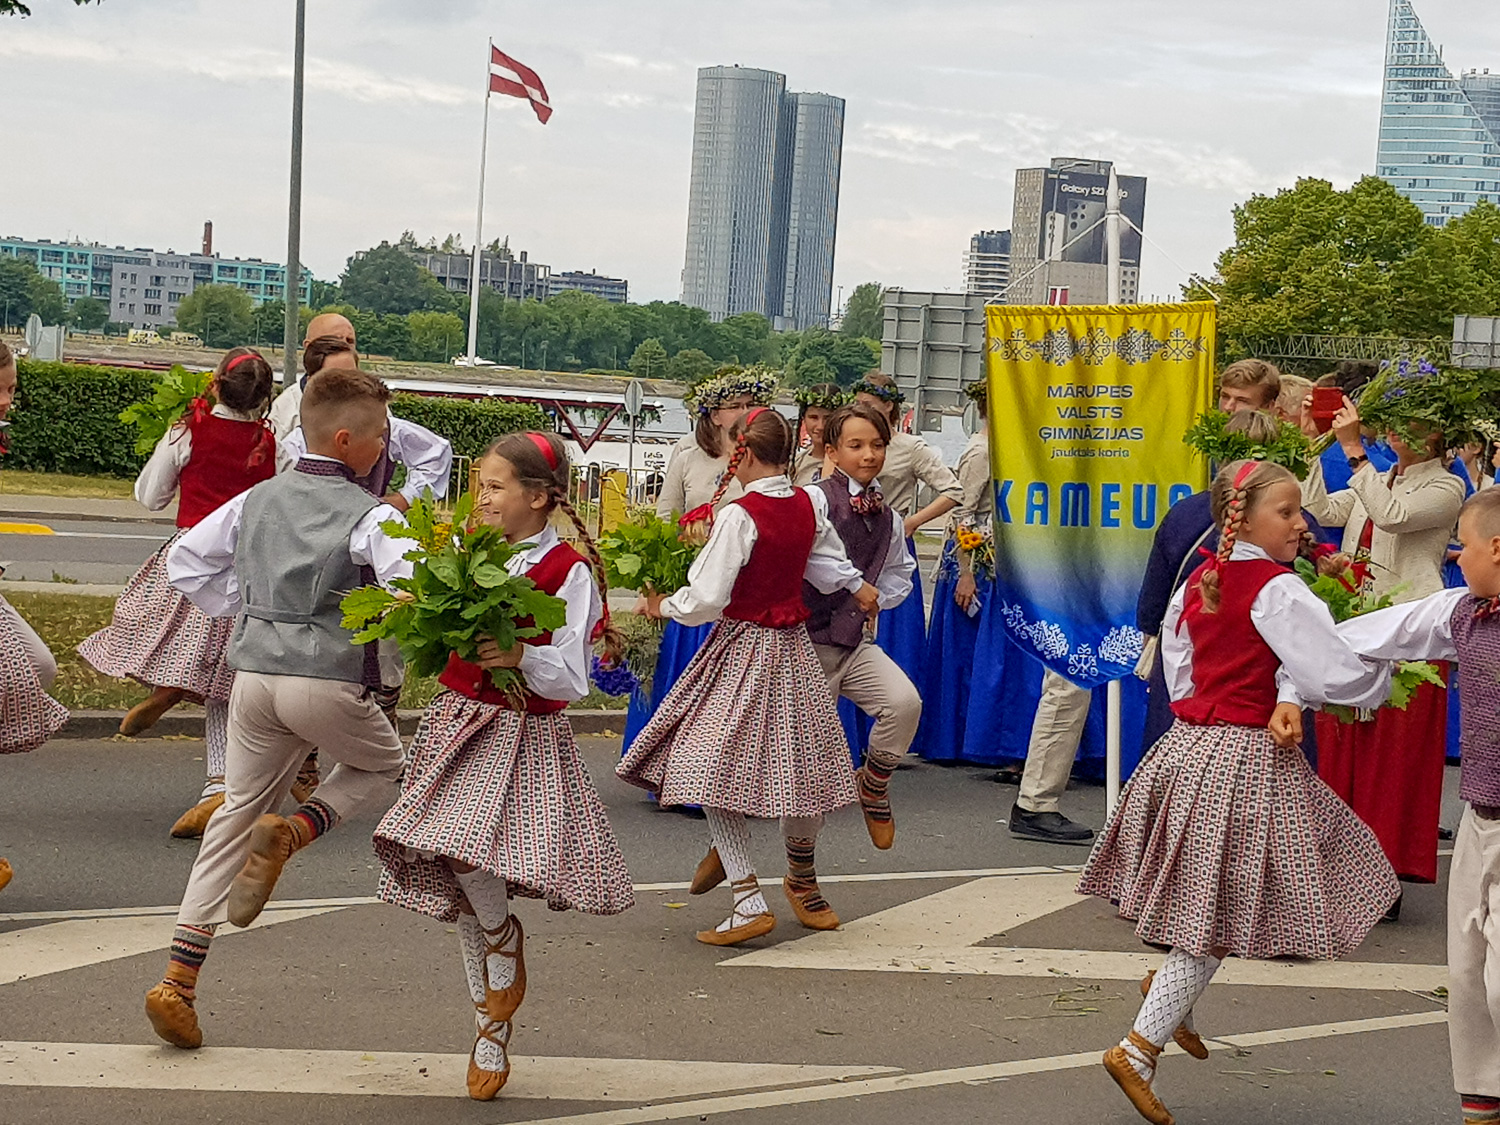 Kinder in traditioneller Kleidung tanzen am Latvian Song & Dance Festival in Riga